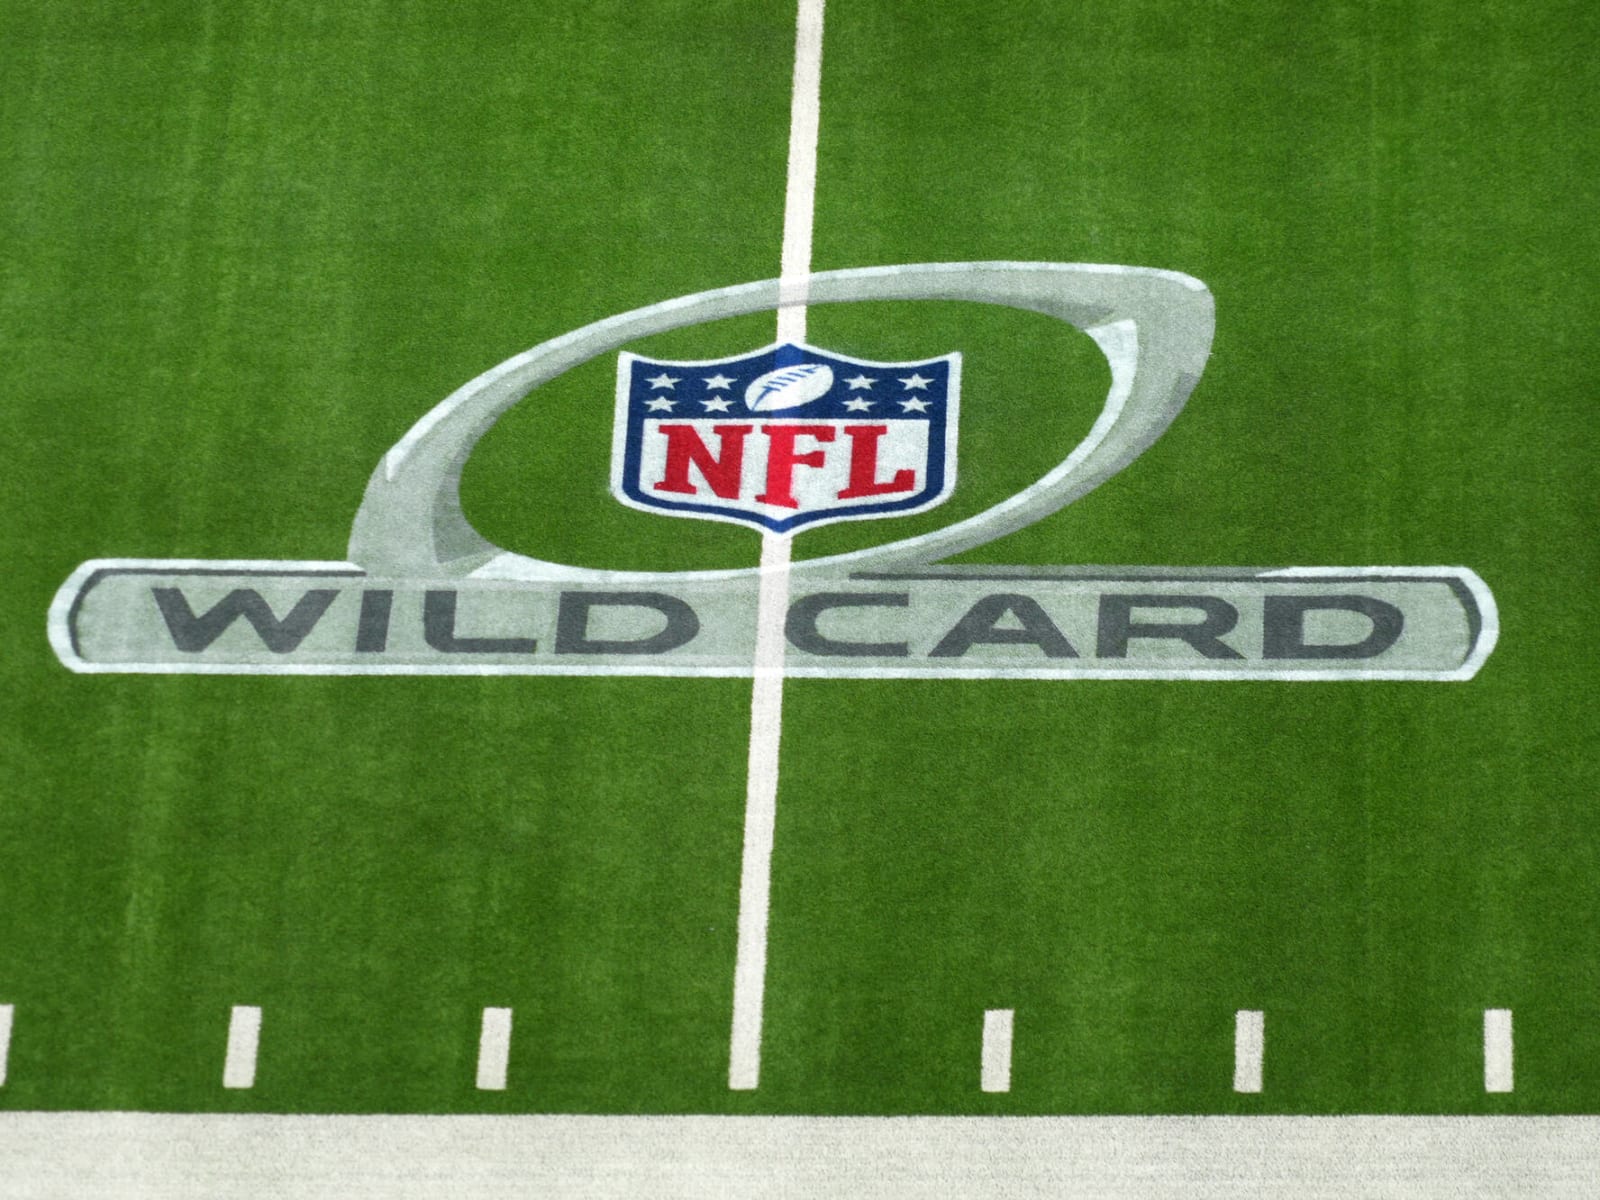 ESPN's Super Bowl Favorite Emerges Following Wild Card Weekend 